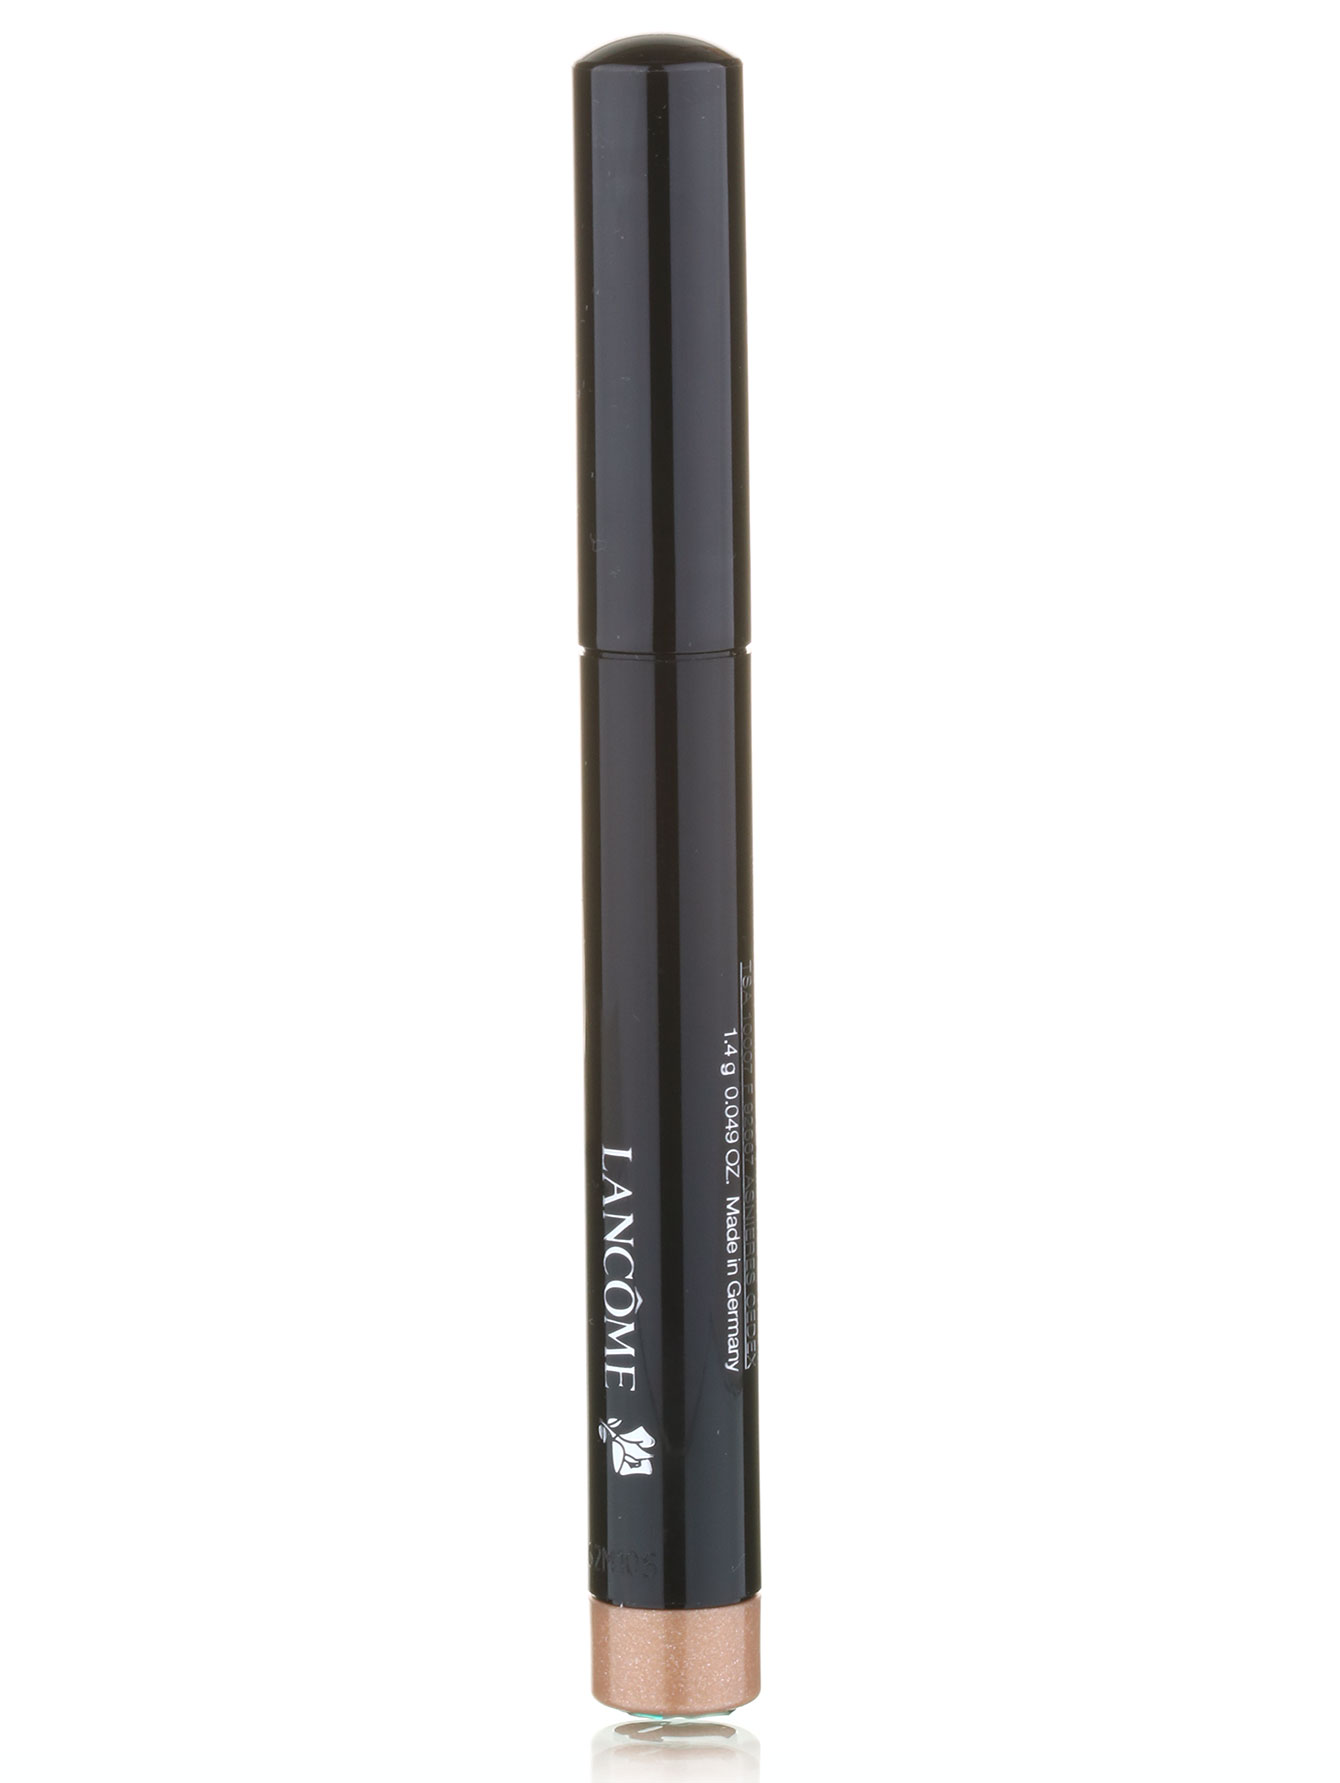  Тени-карандаш - №01, Hydra Zen Neurocalm - Модель Верх-Низ